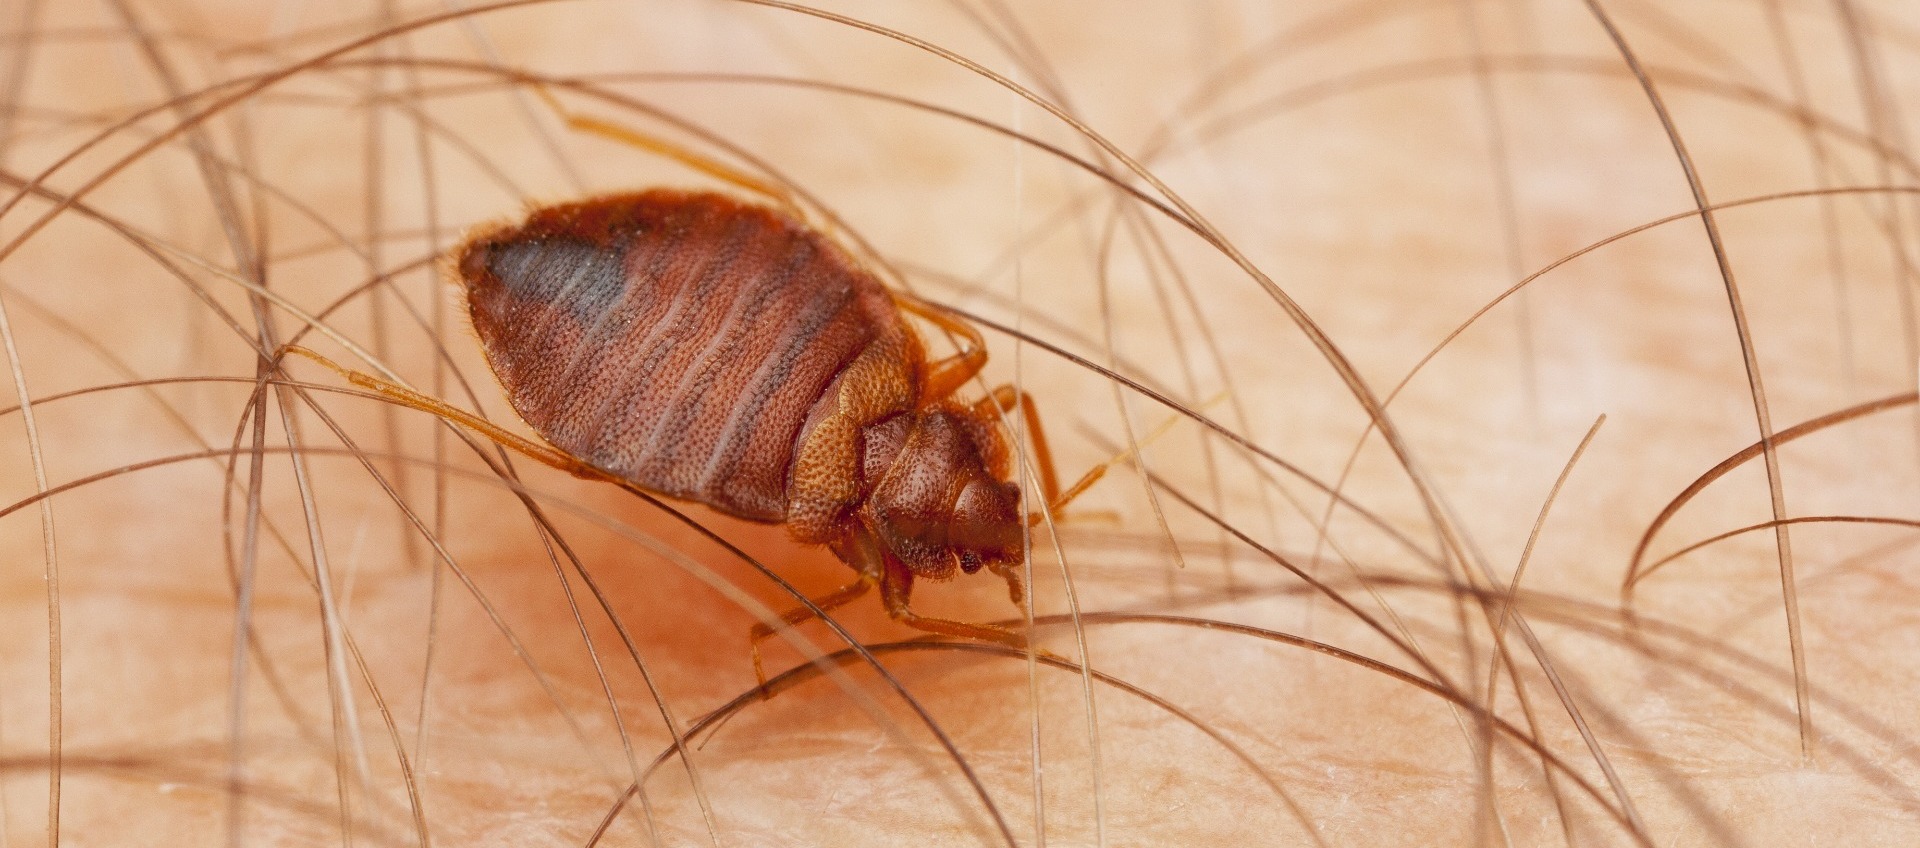 Bedbug on skin